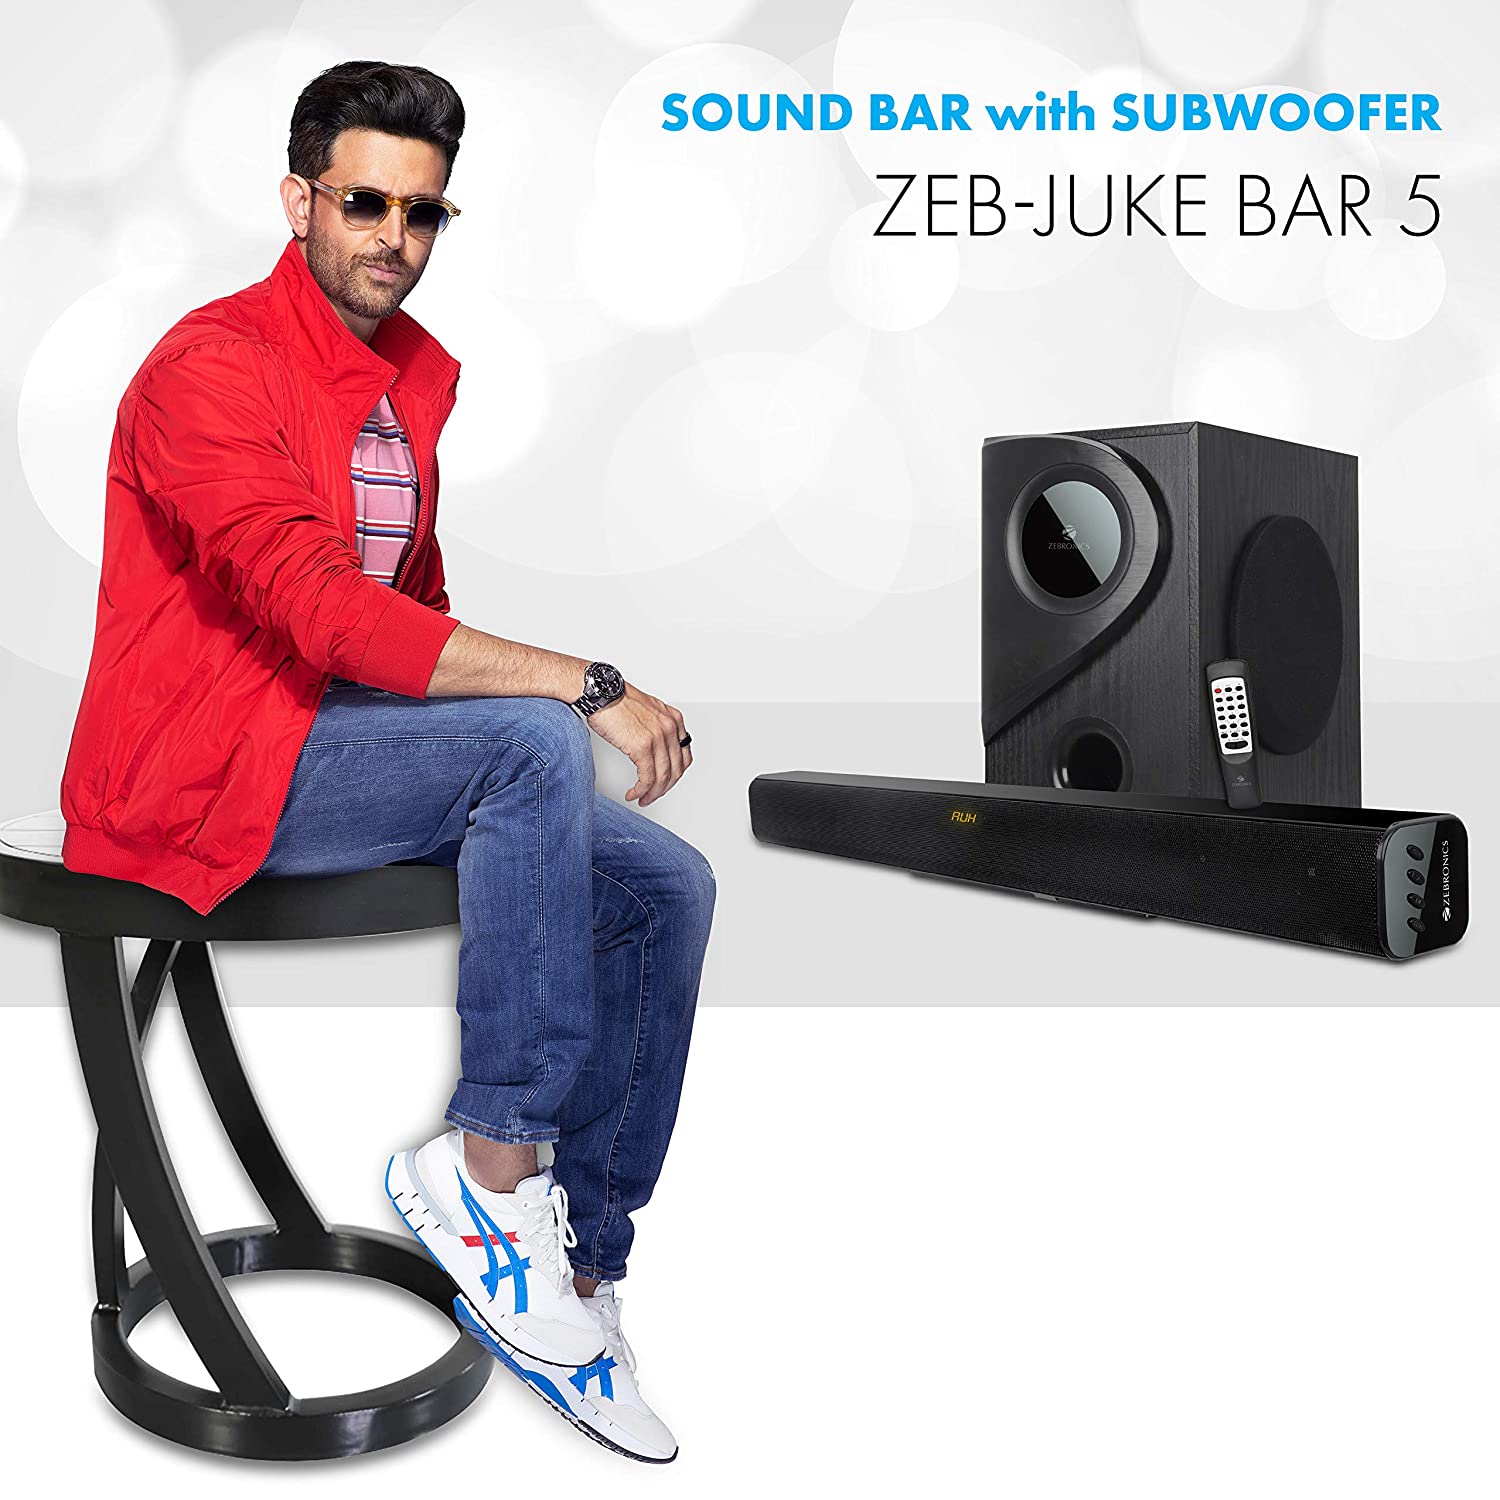 Zebronics Zeb Juke Bar 5 Multimedia Sound Bar with Bluetooth ConnectivityUSB Input and Built in FM